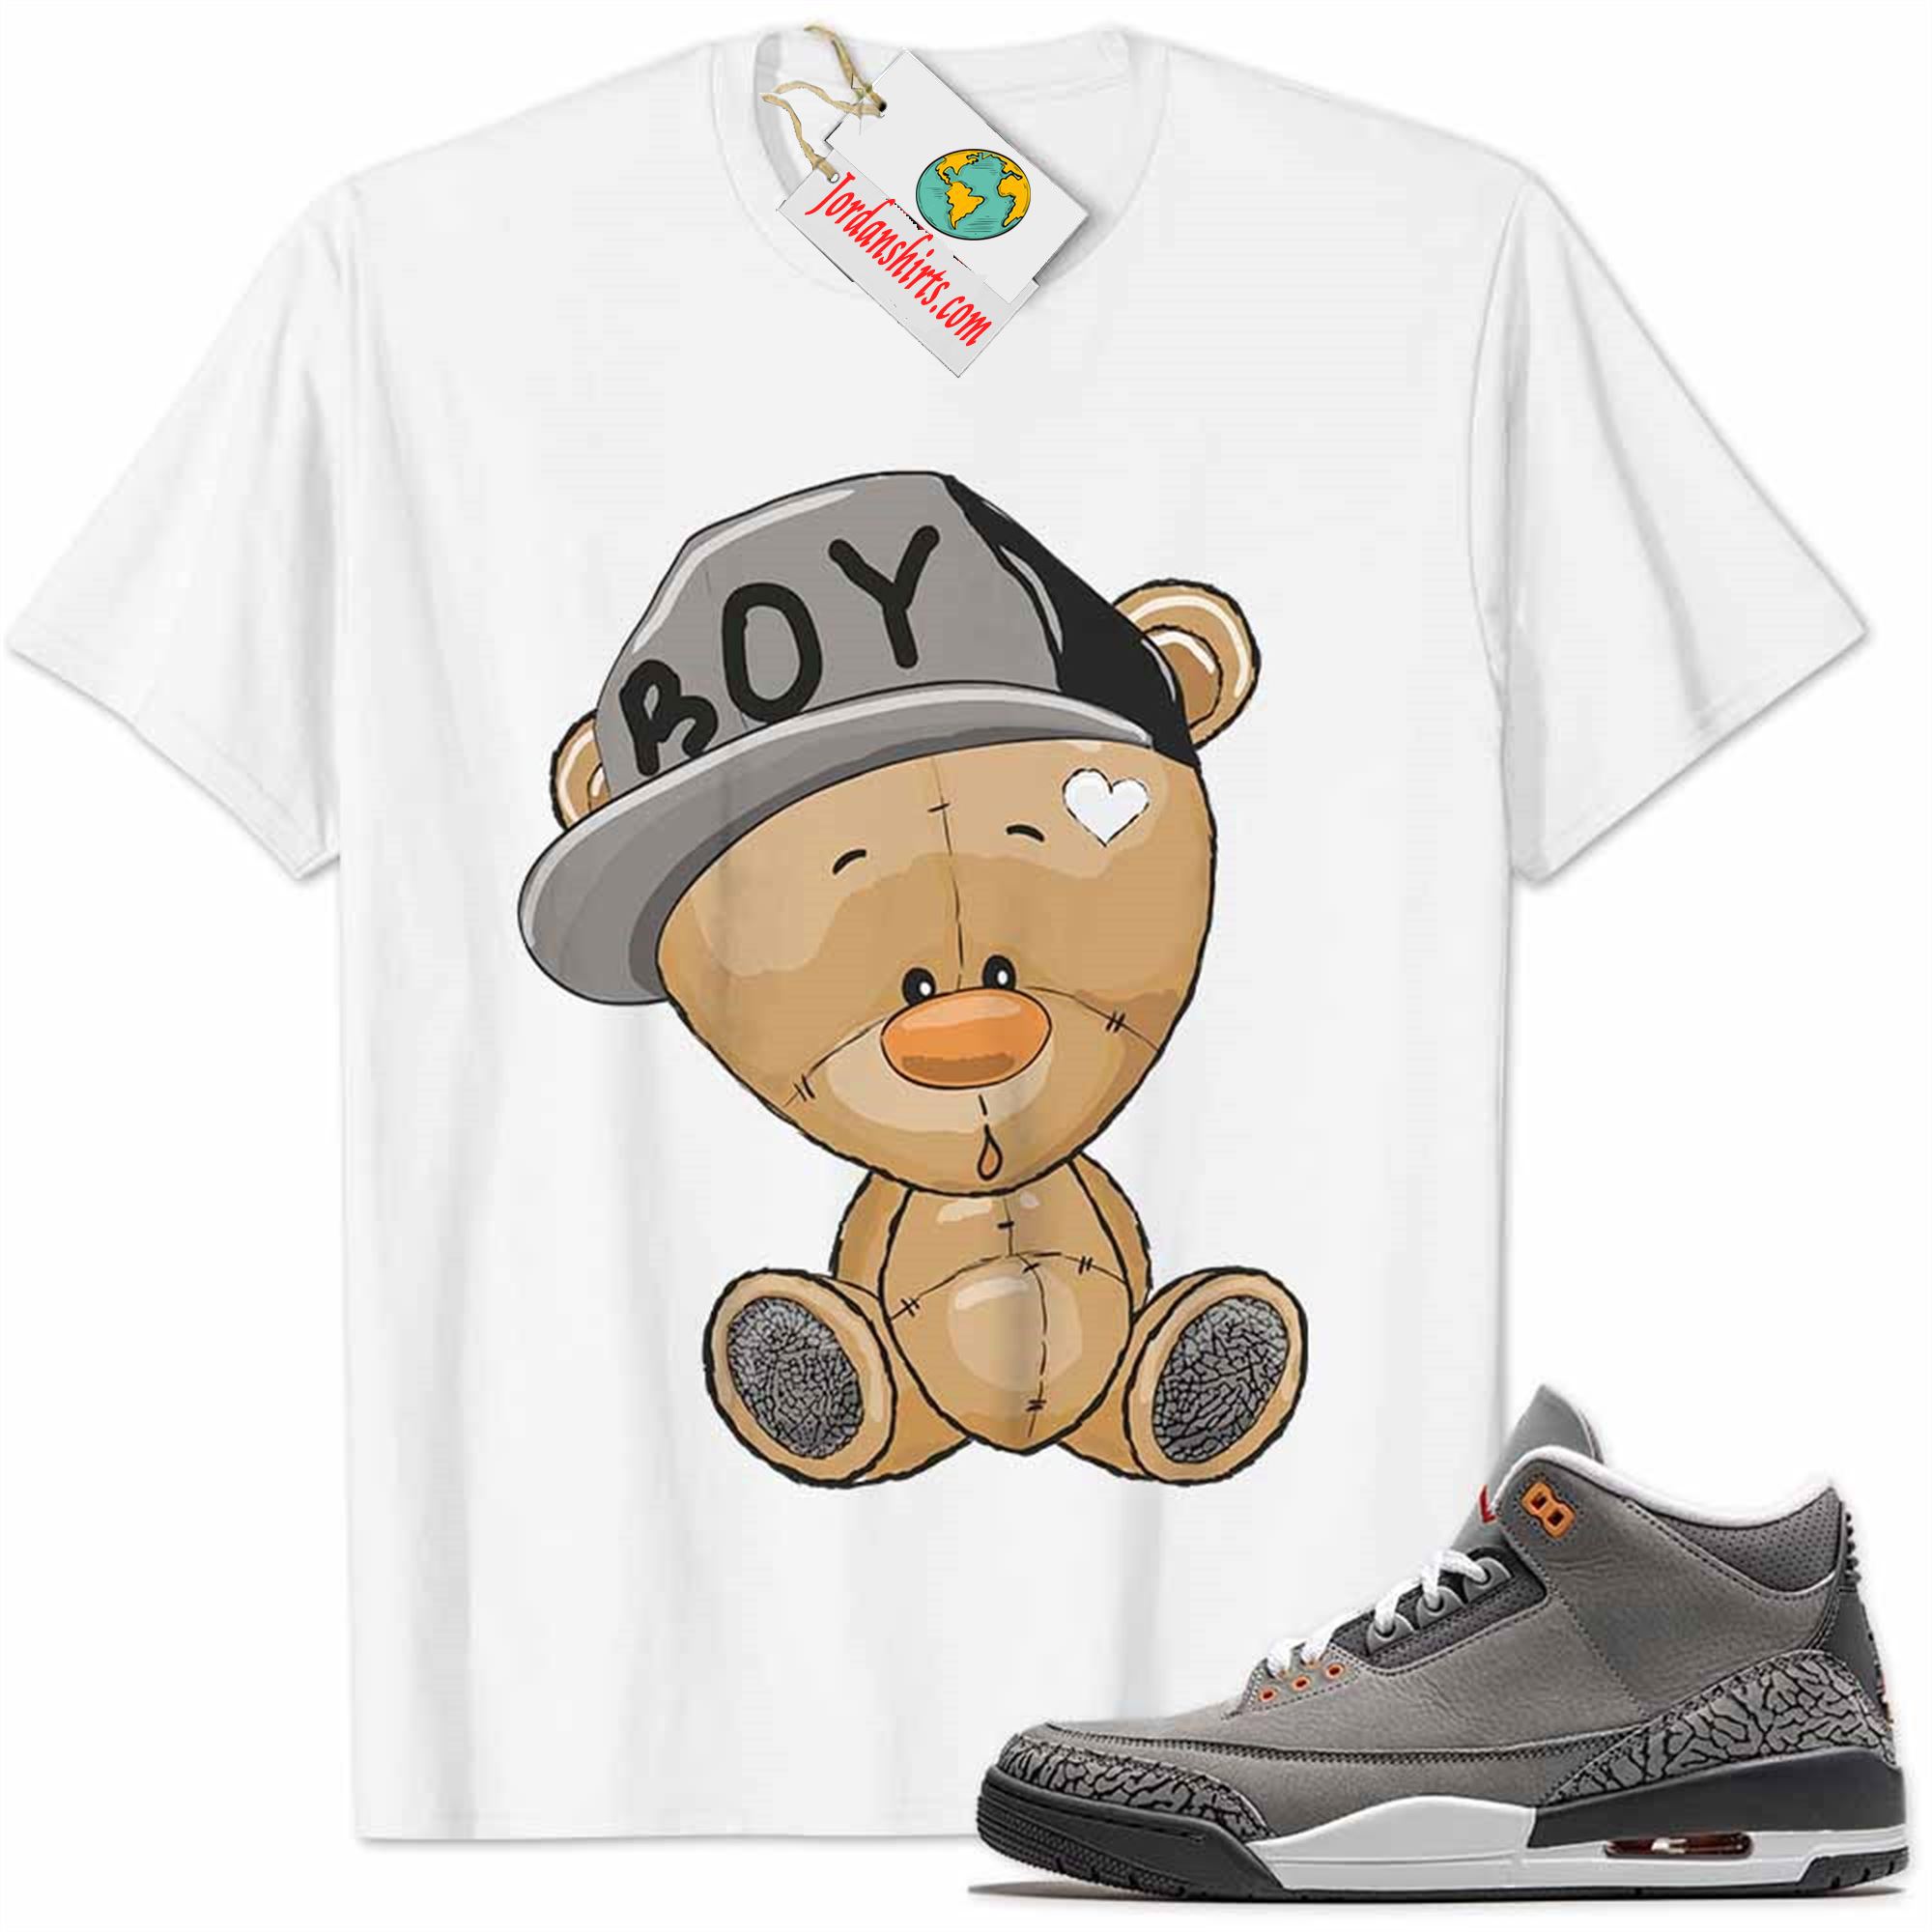 Jordan 3 Shirt, Jordan 3 Cool Grey Shirt Cute Baby Teddy Bear White Plus Size Up To 5xl